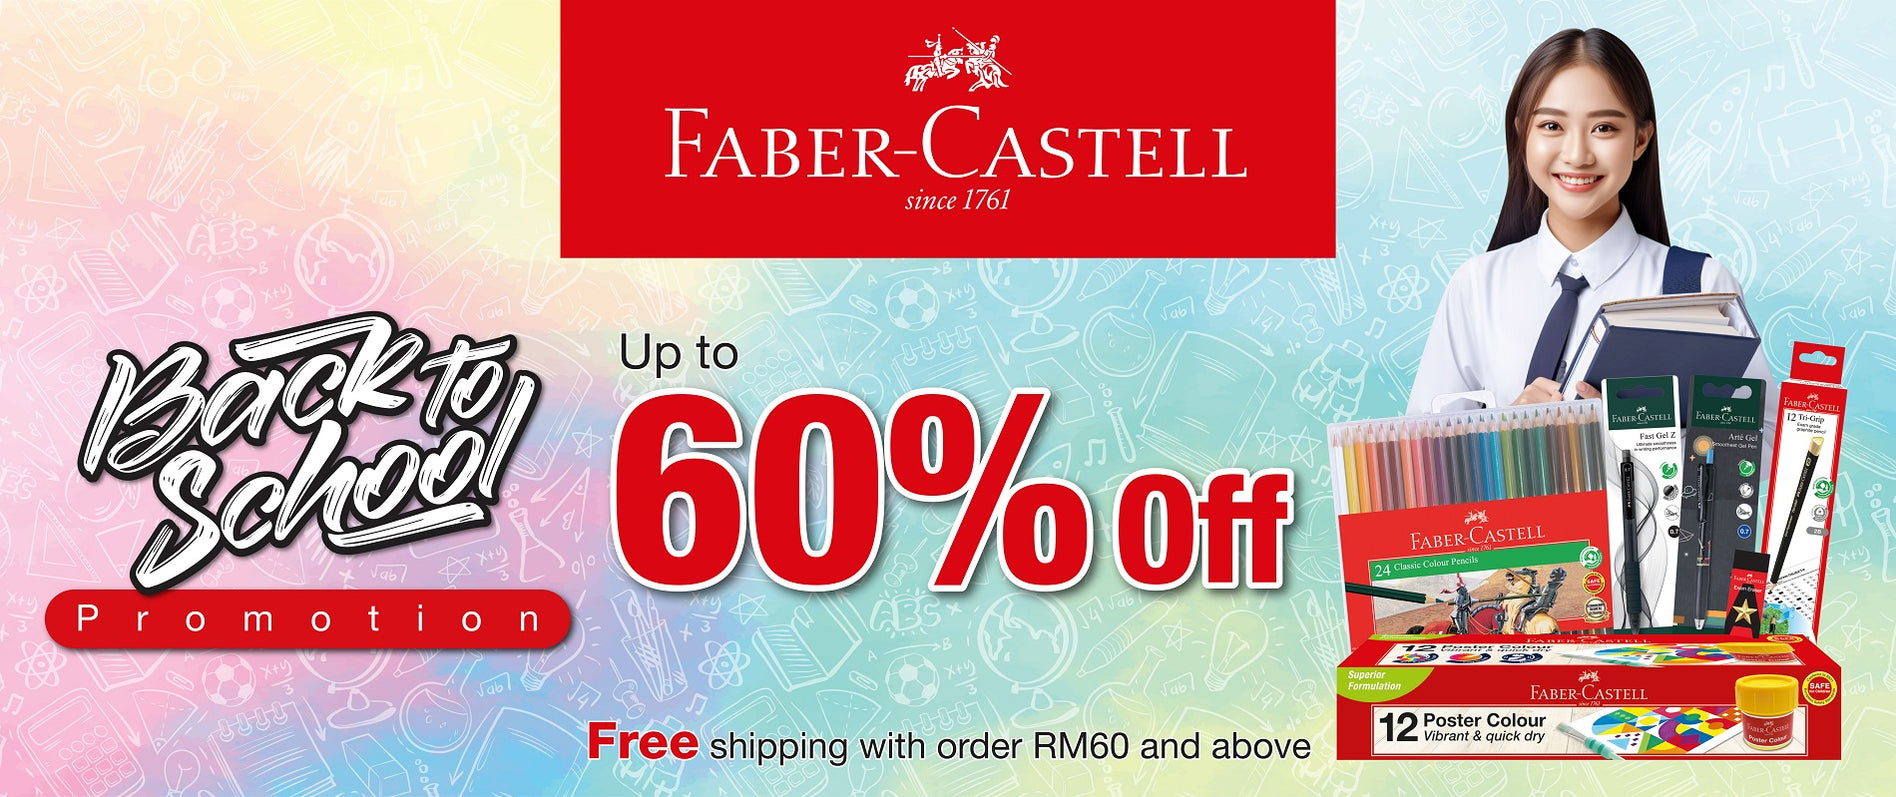 Official Website of Faber-Castell